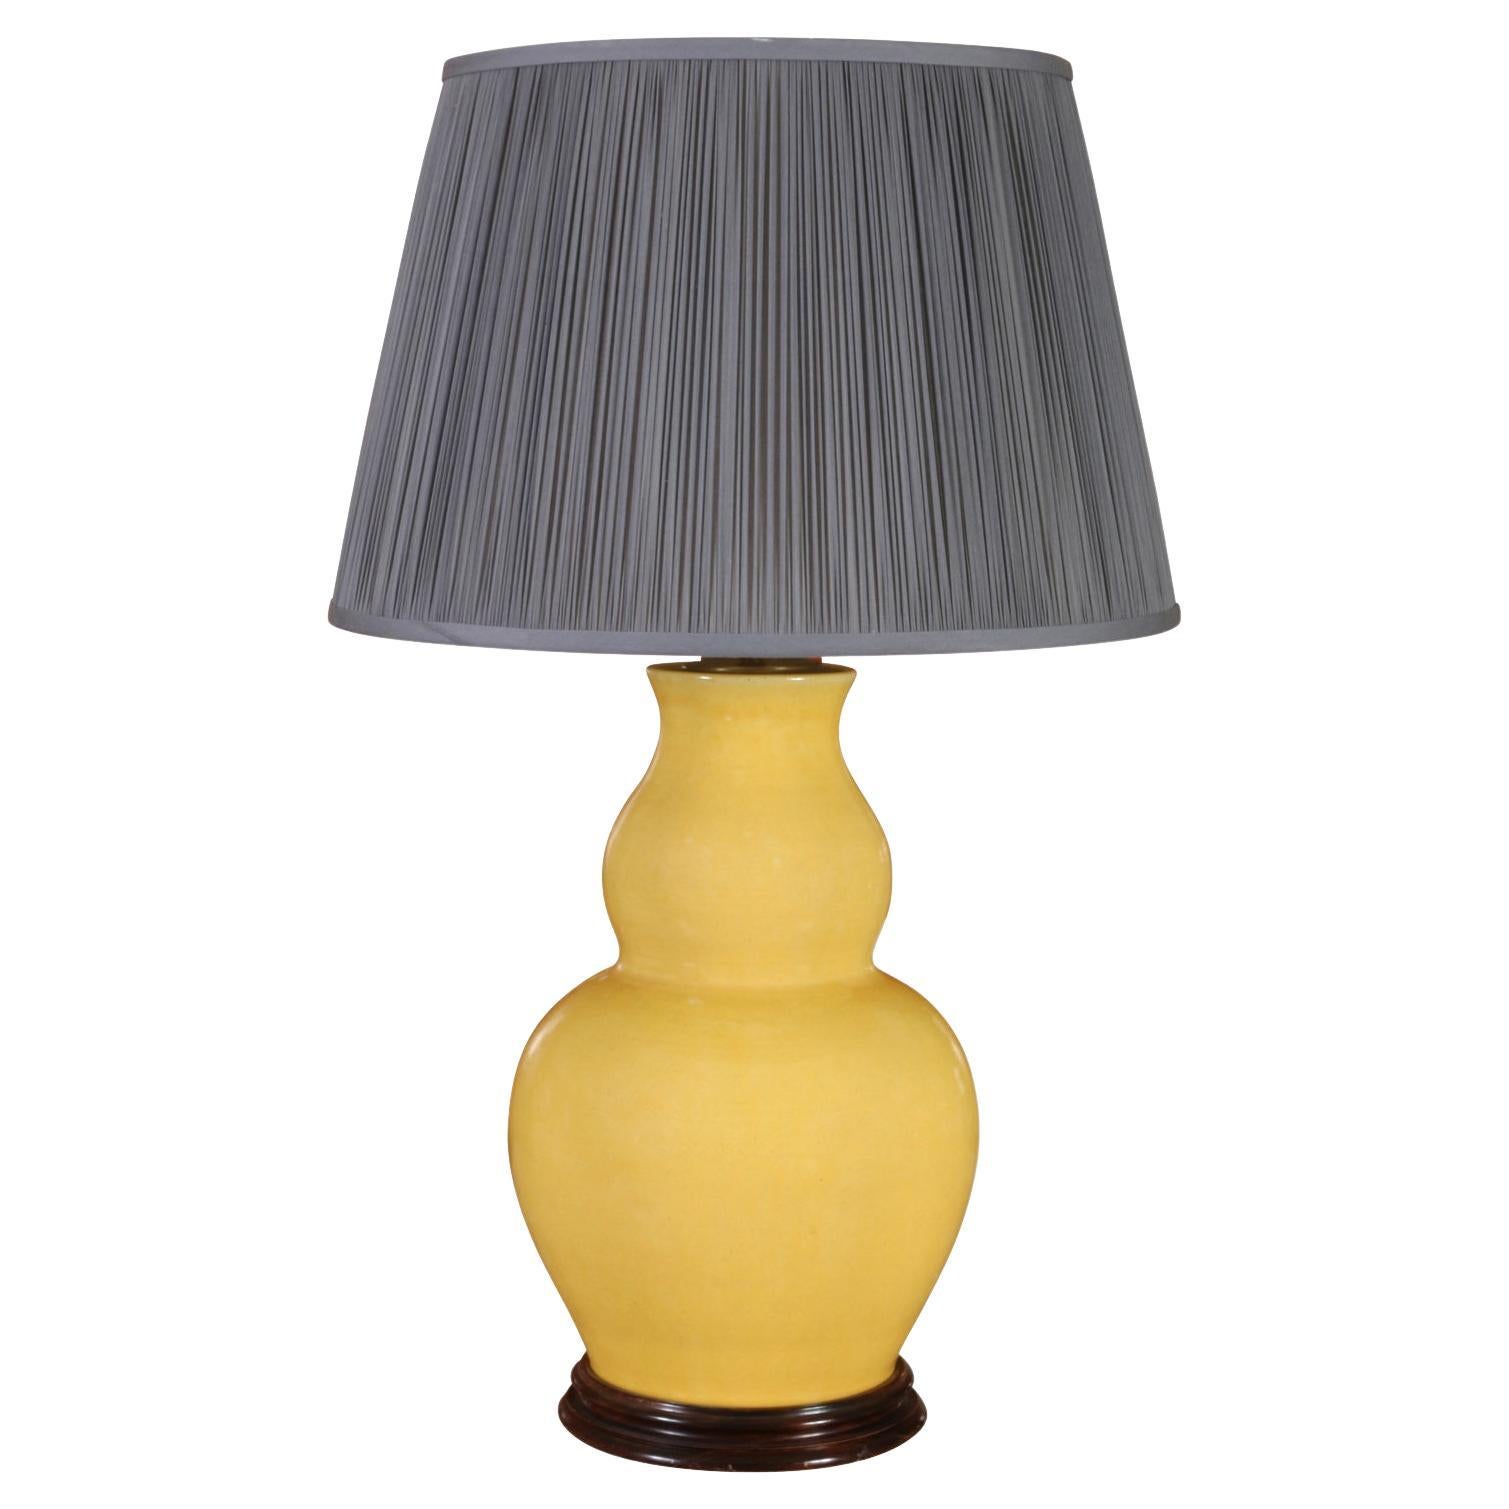 Double Gourd Yellow Glazed Ceramic Table Lamp on Wood Base